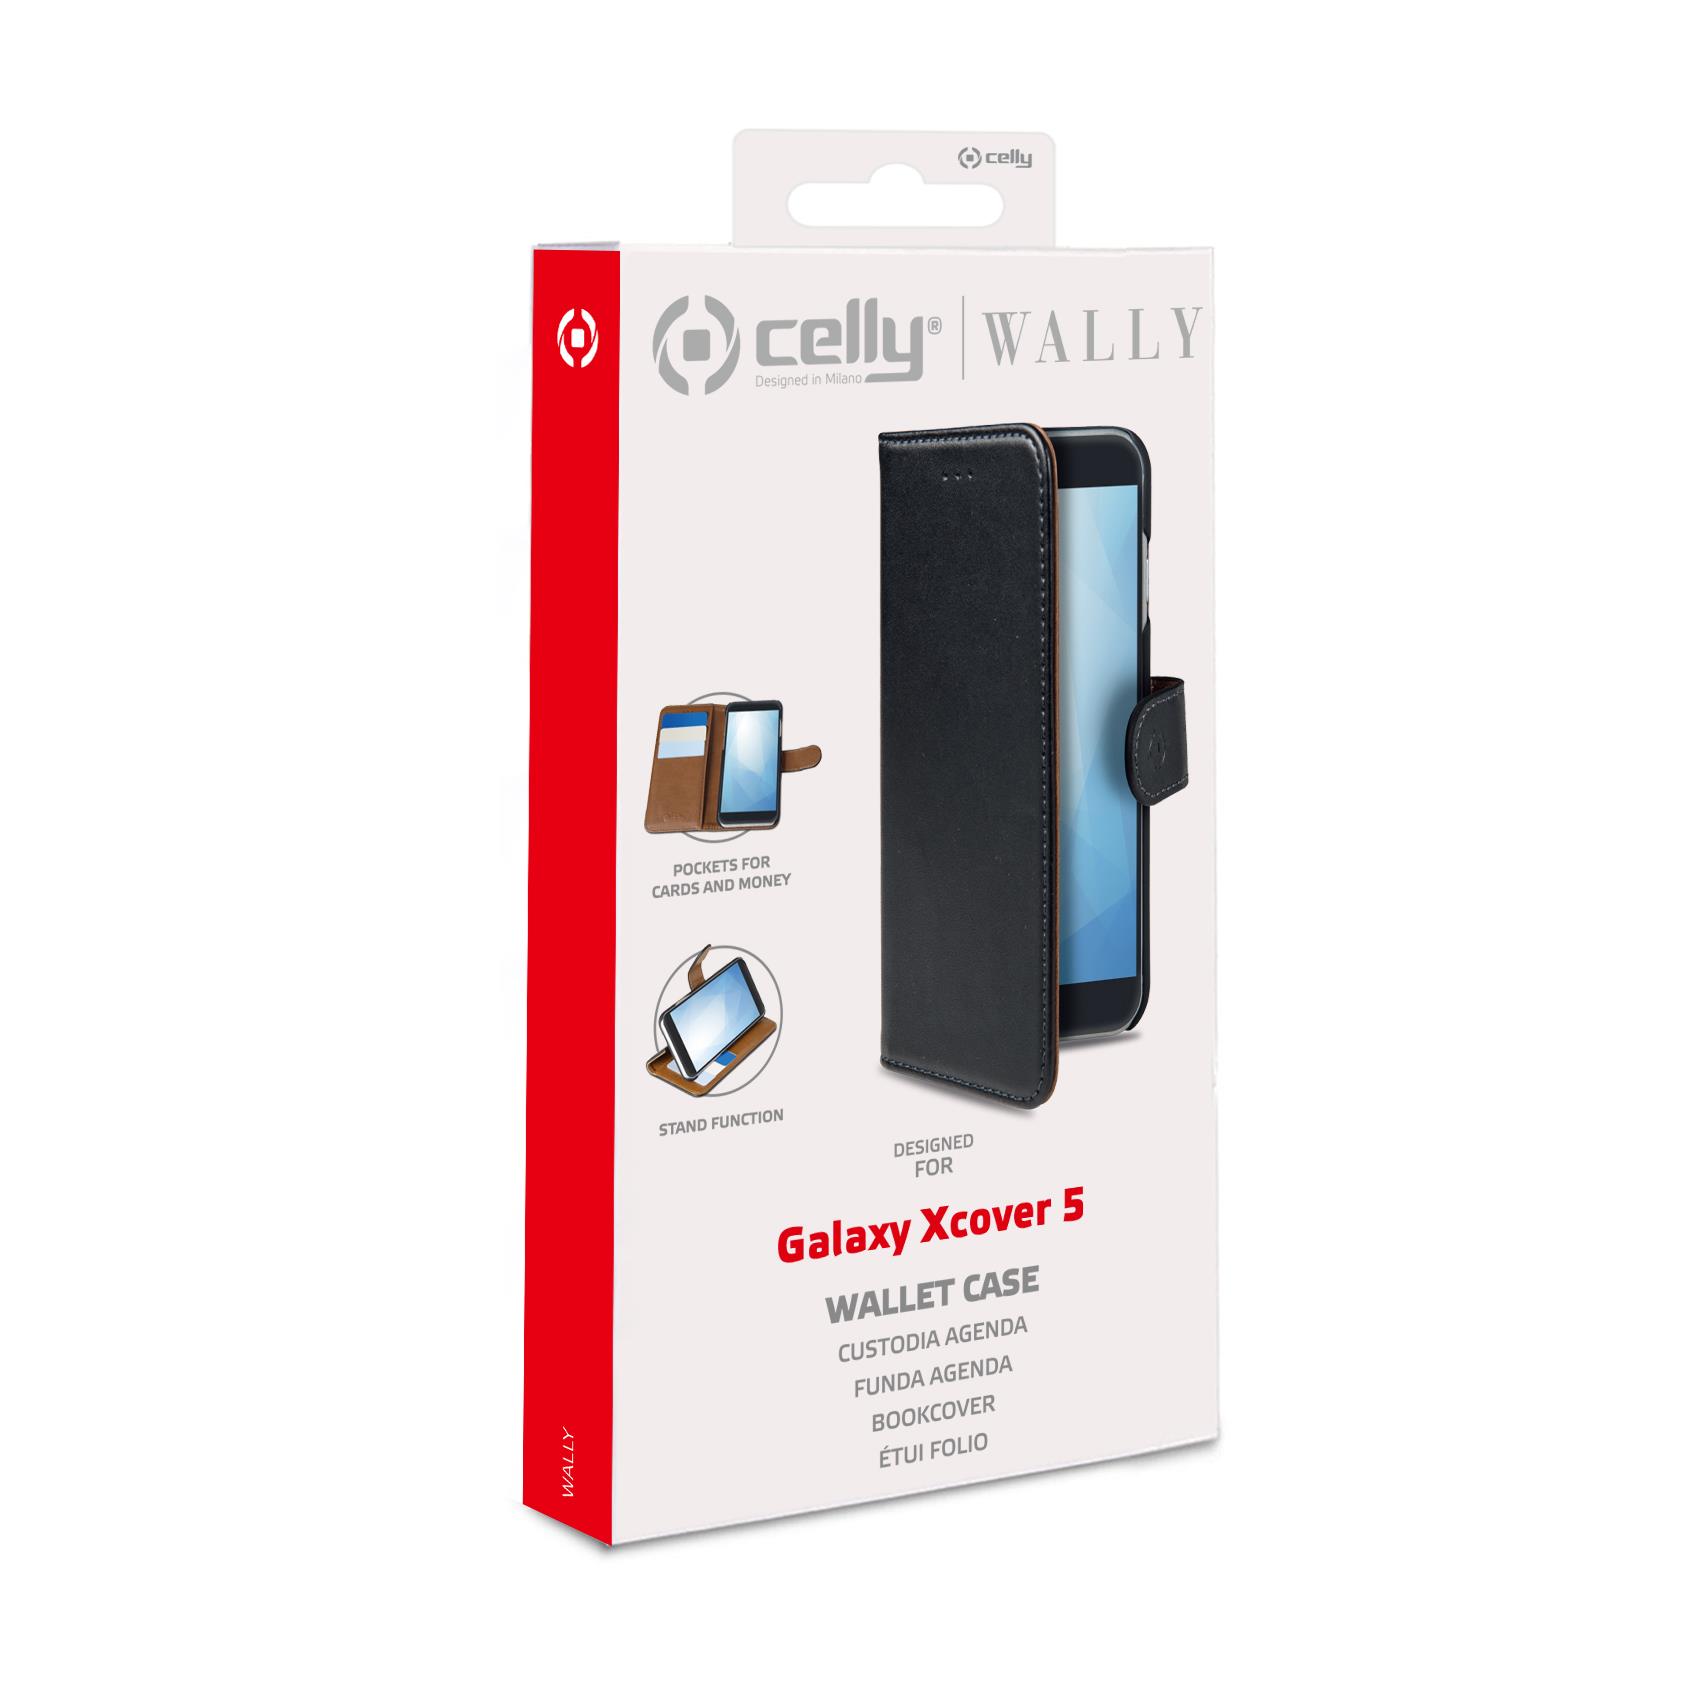 Wally Case Galaxy Xcover 5 Black Celly Wally960 8021735189084